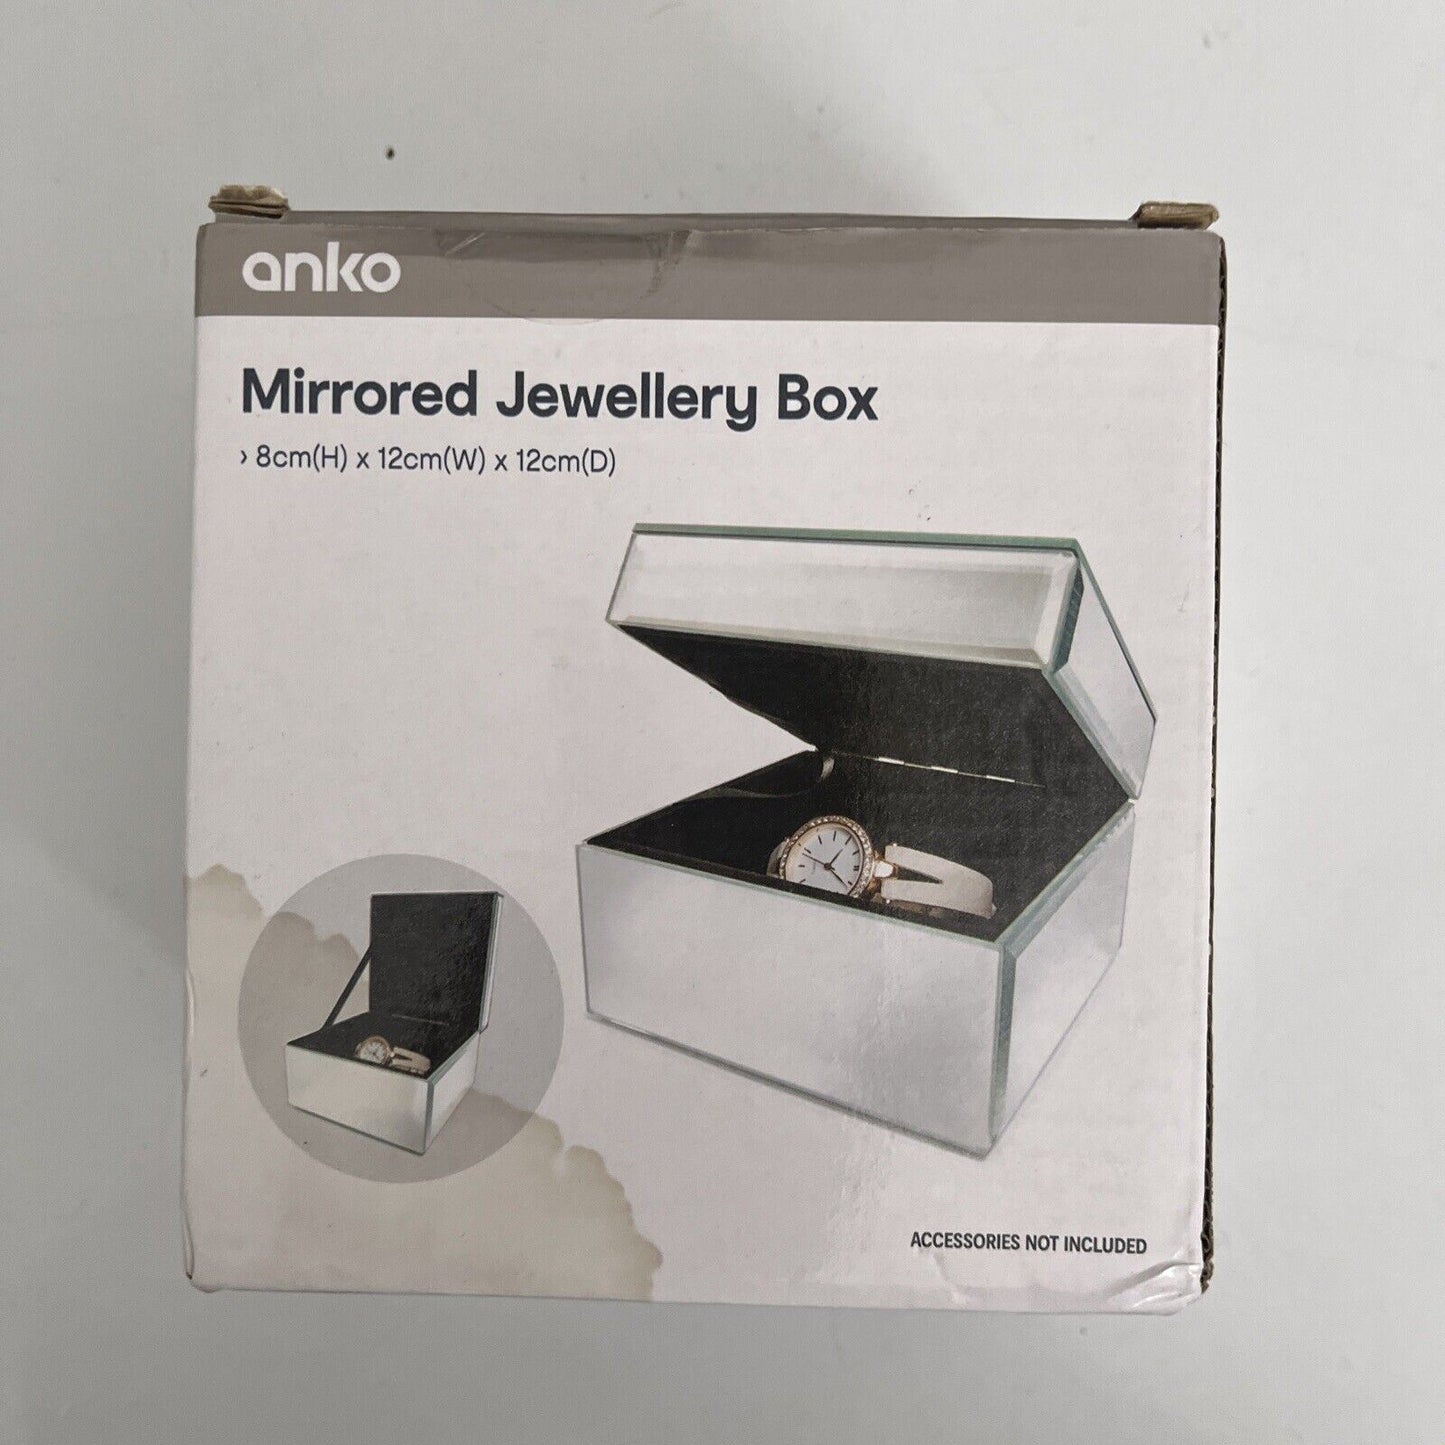 Anko Mirrored Jewellery Box *New*